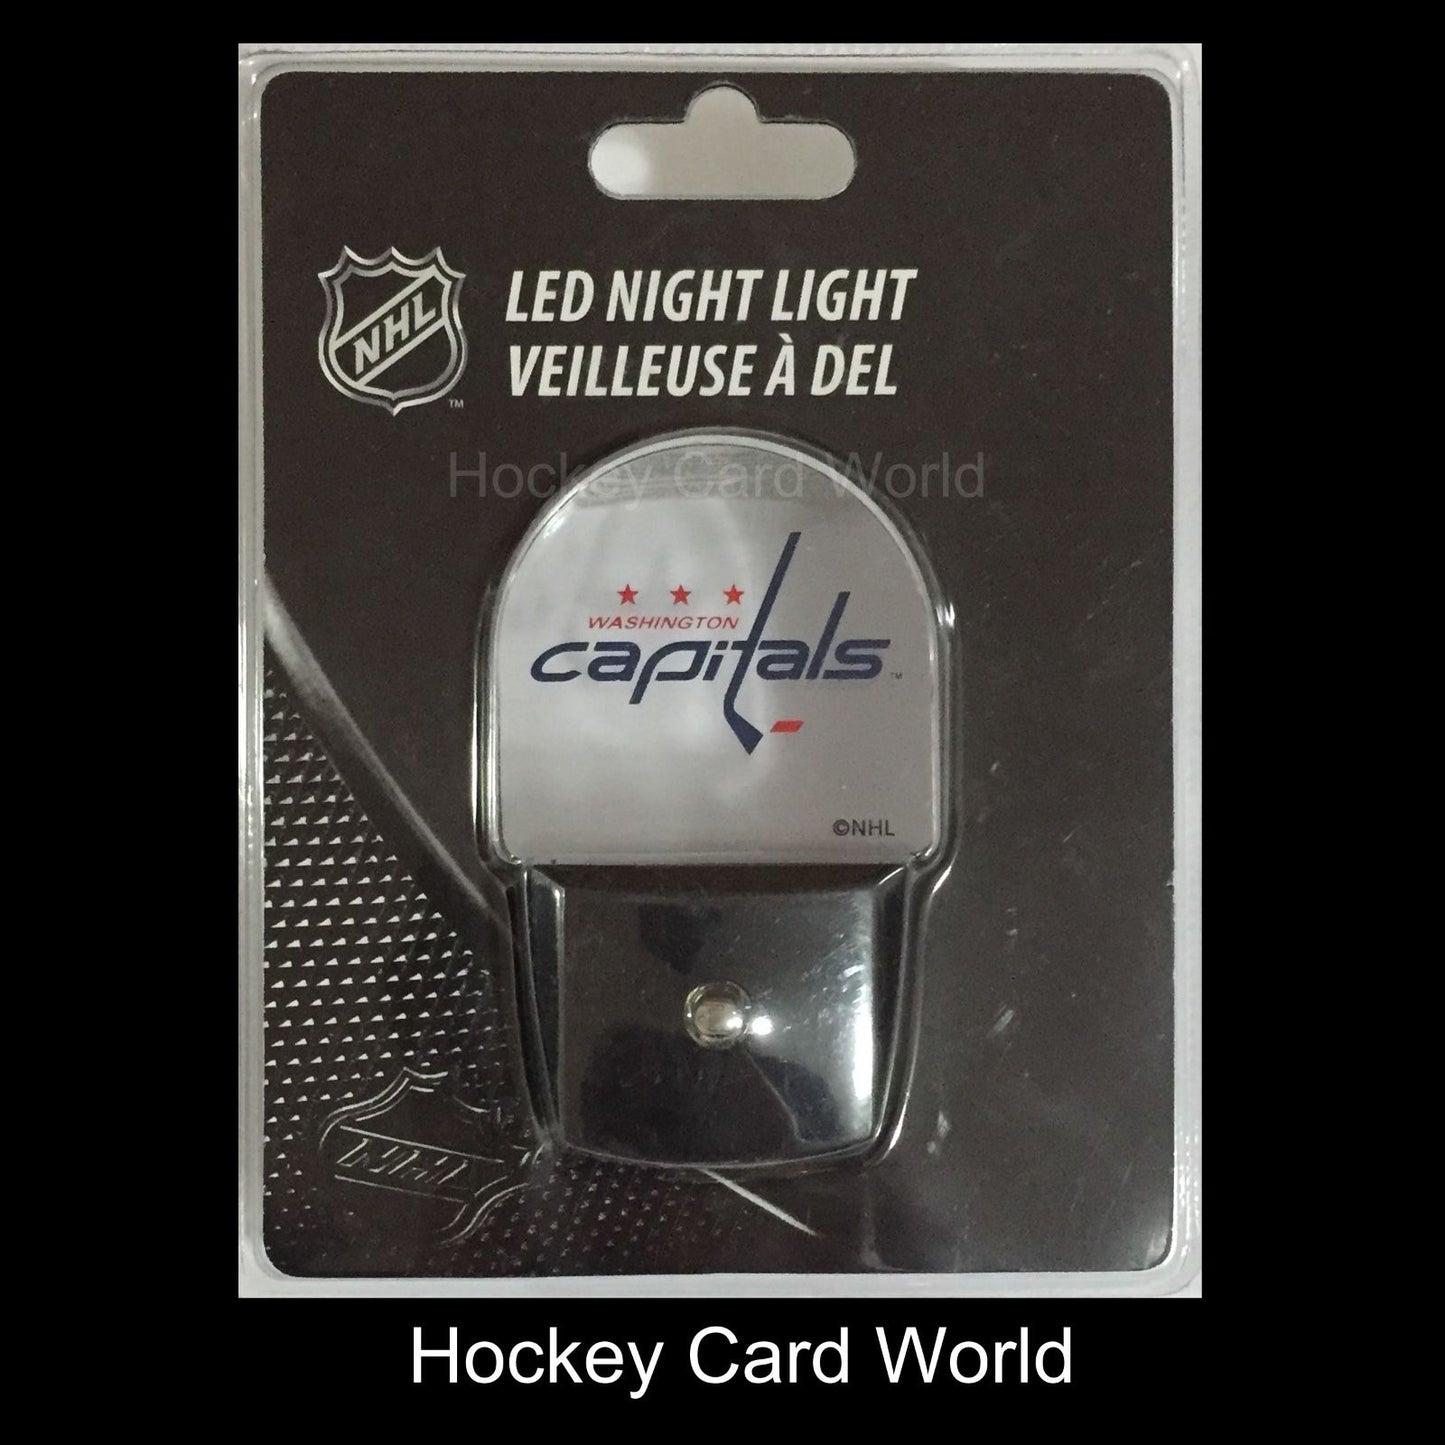  Washington Capitals Licensed NHL LED Night Light - Brand New In Box Image 1